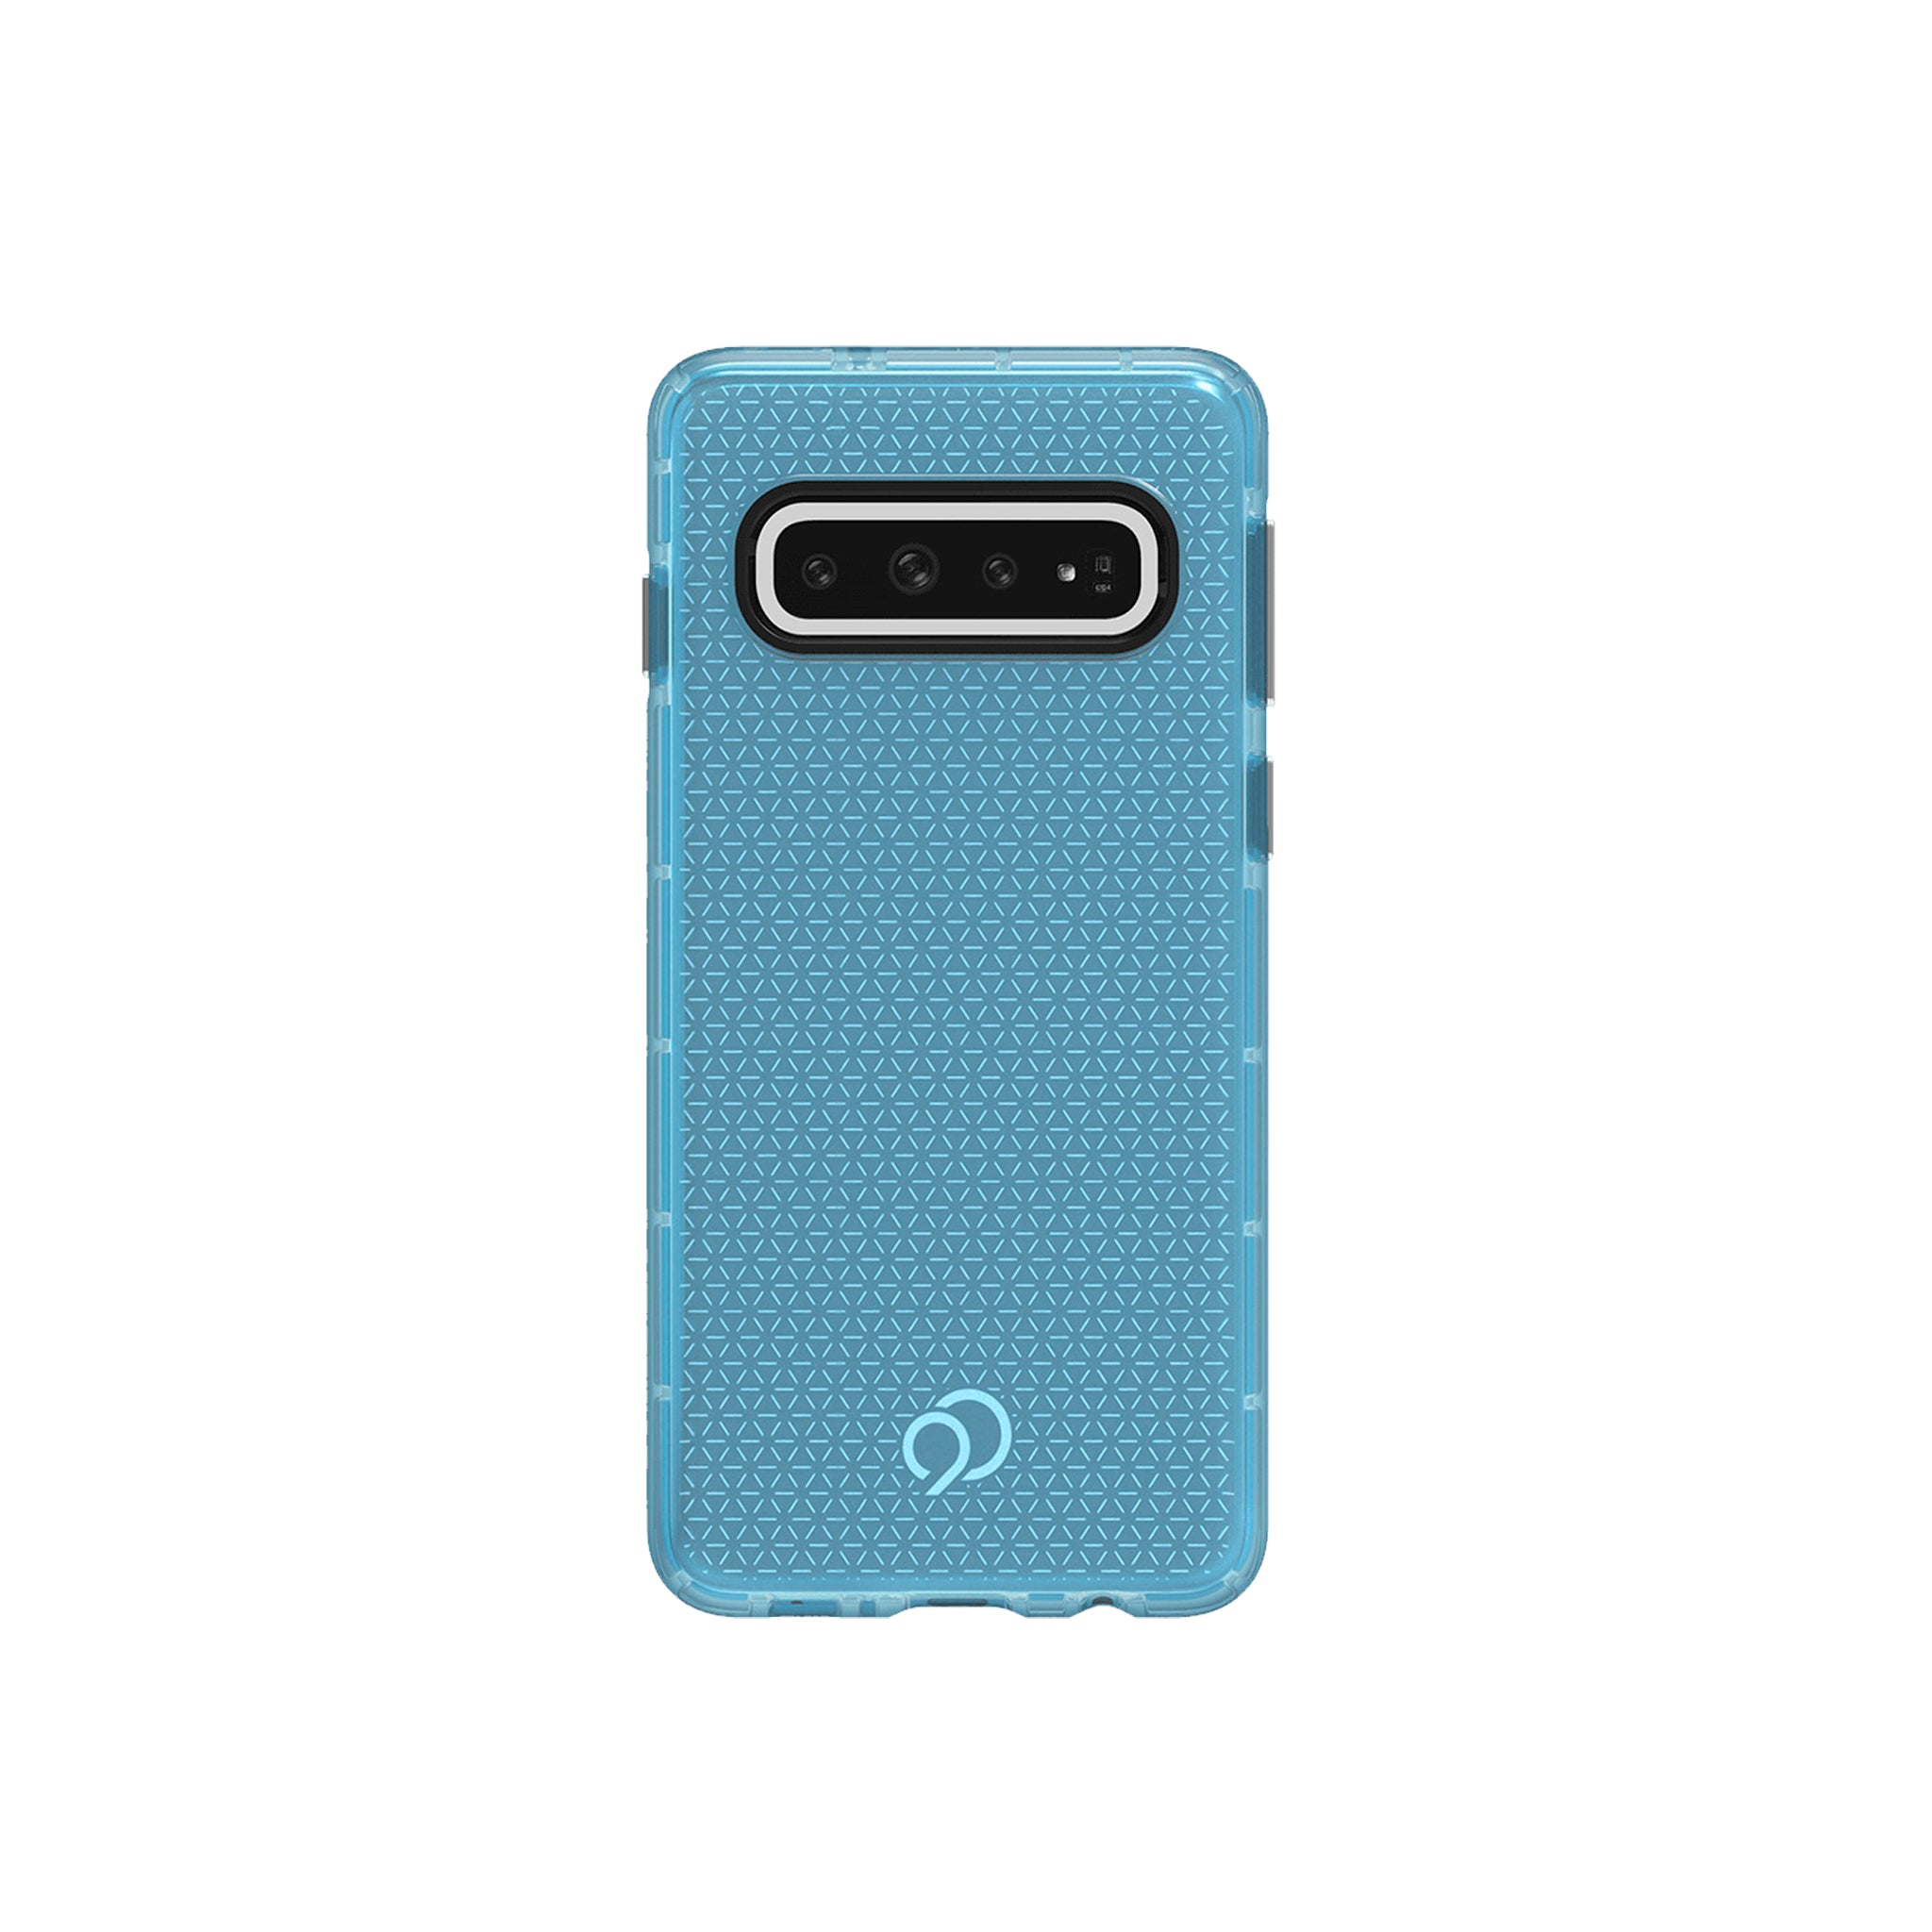 Nimbus9 - Phantom 2 Case For Samsung Galaxy S10 - Pacific Blue